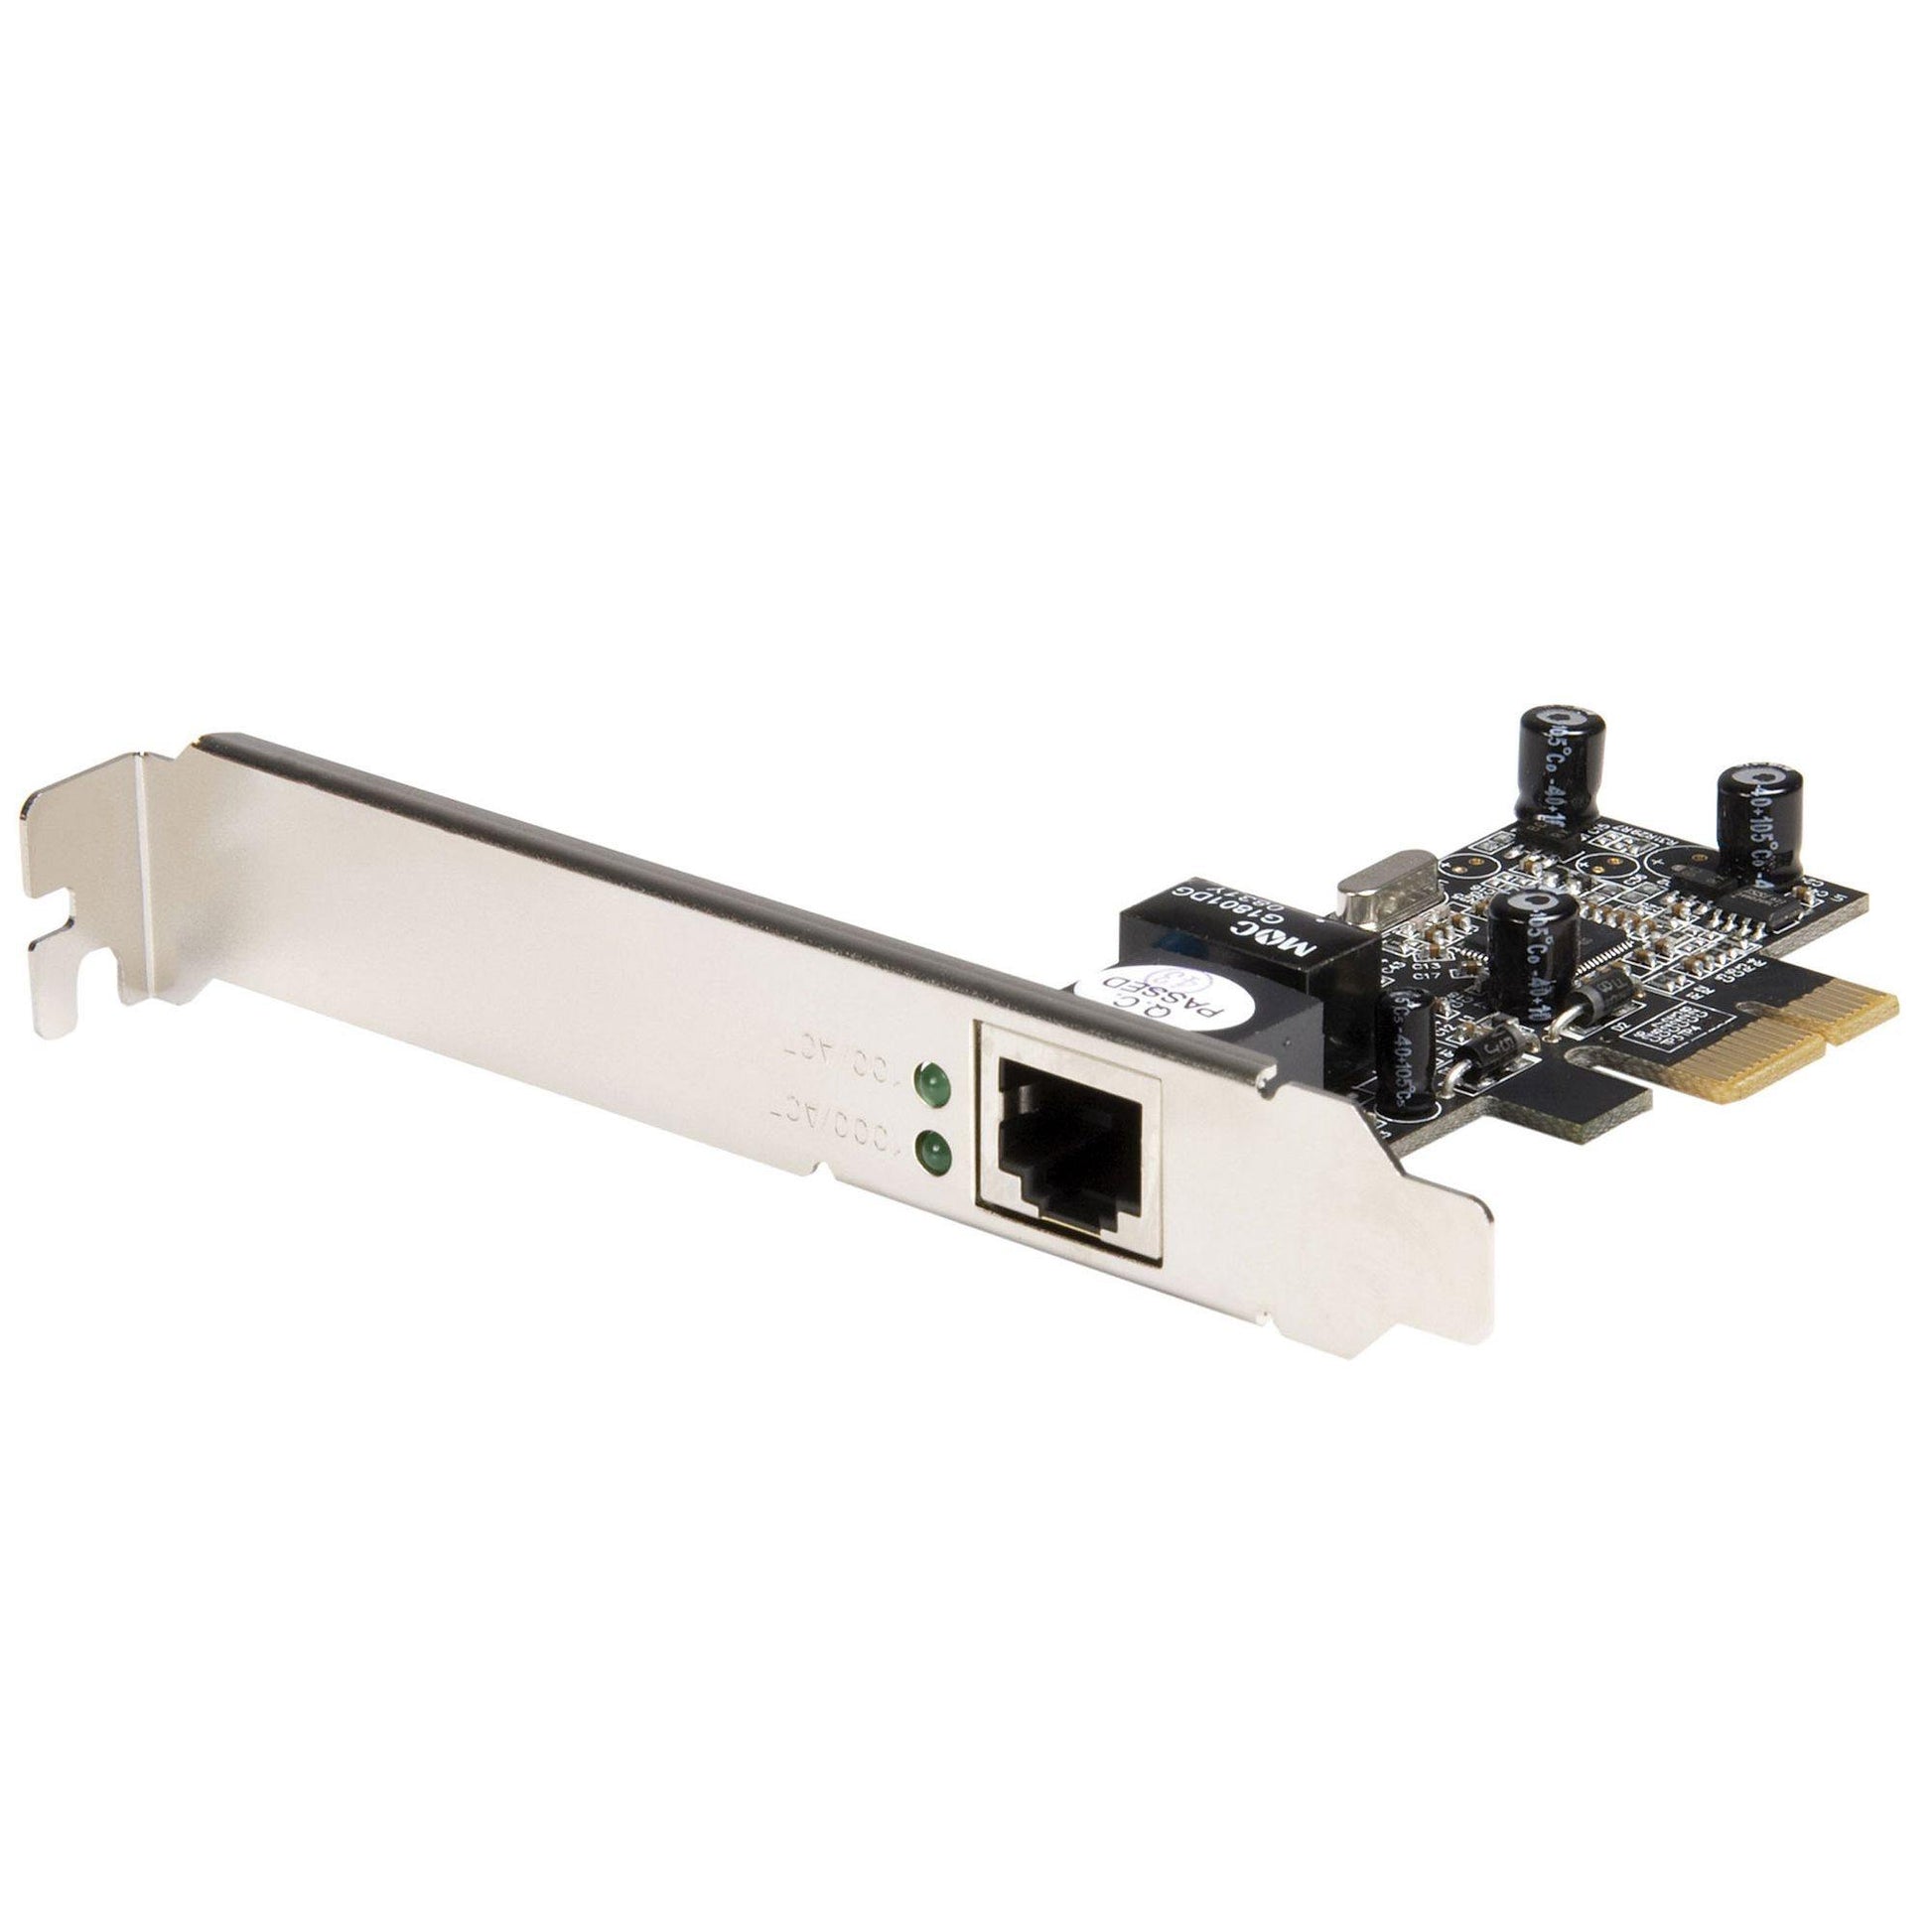 1 Port PCI Express Gigabit Ethernet NIC Network Adapter Card - netgear-gi